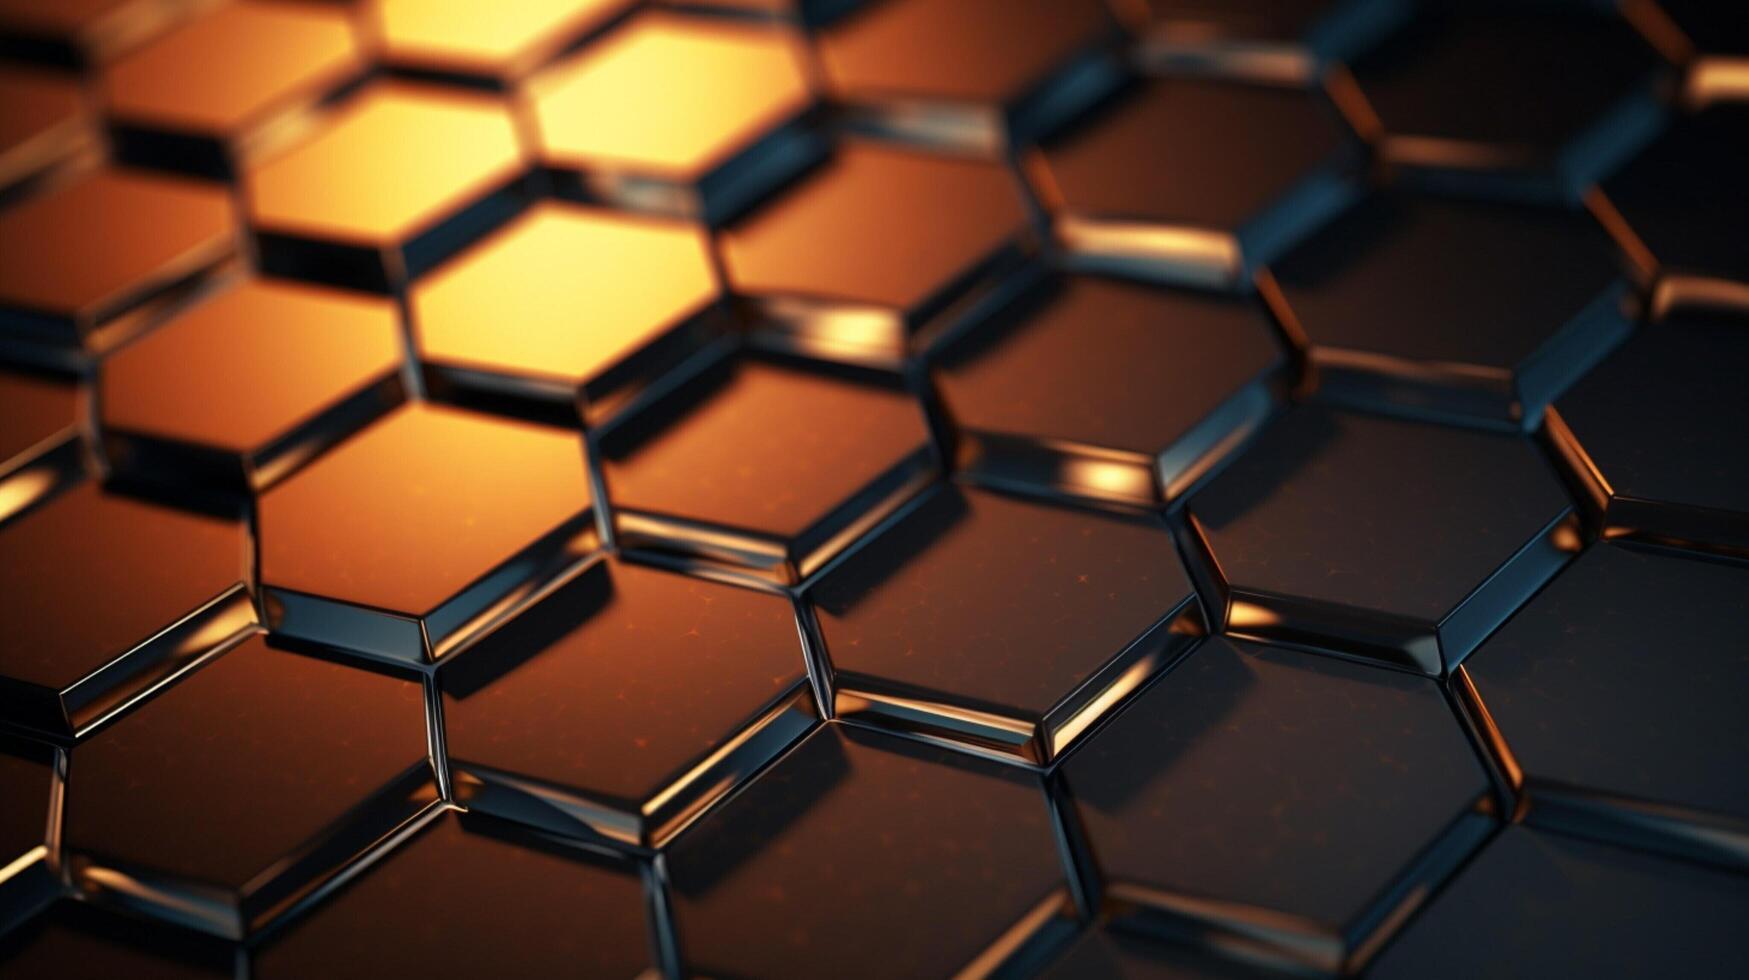 AI generated Metallic Honeycomb Grid background photo